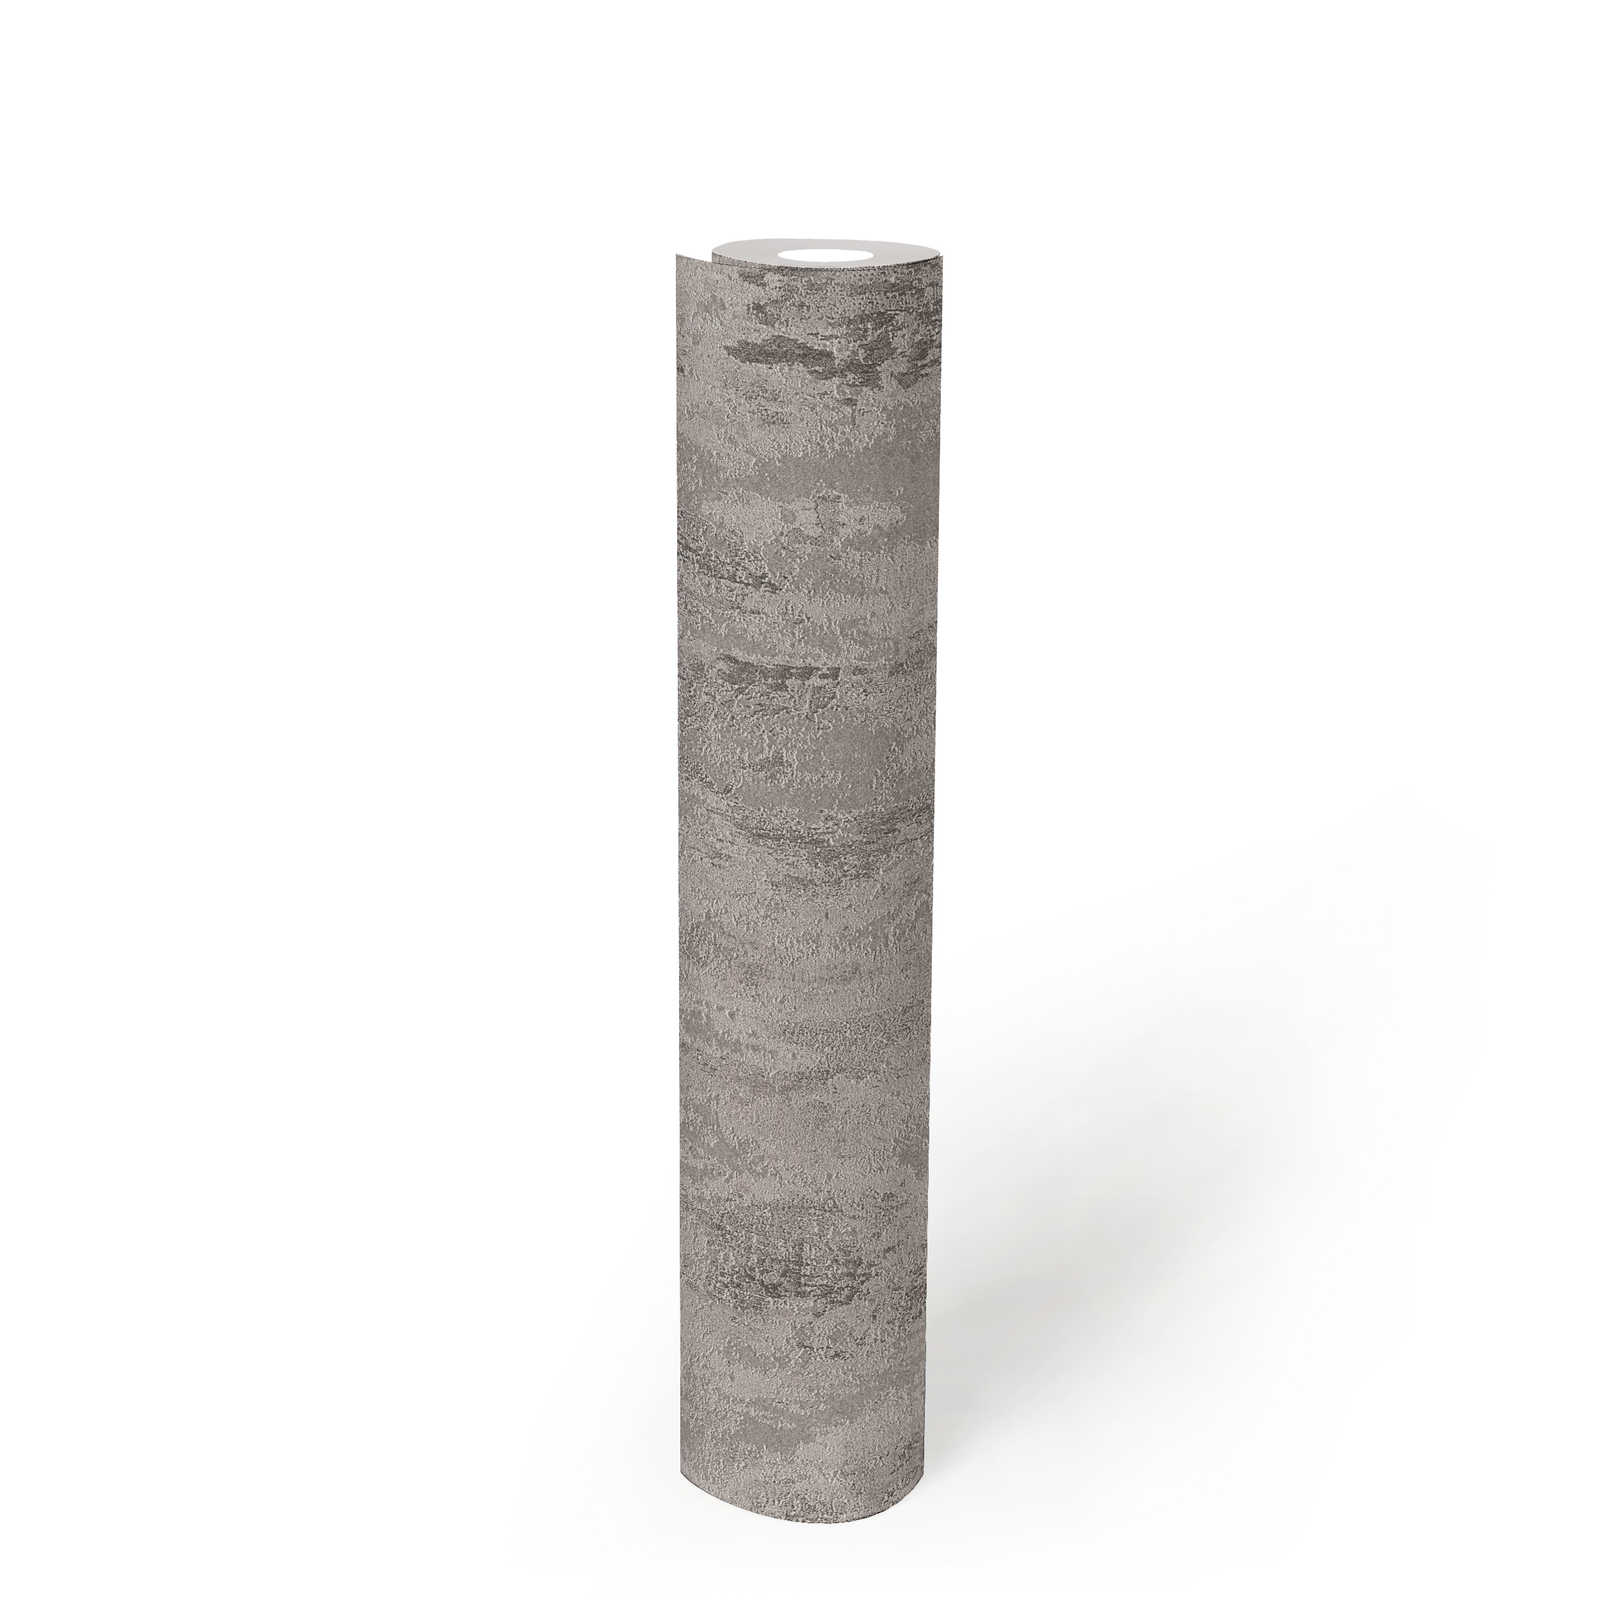             Rost Vliestapete mit Strukturmuster – Grau, Silber
        